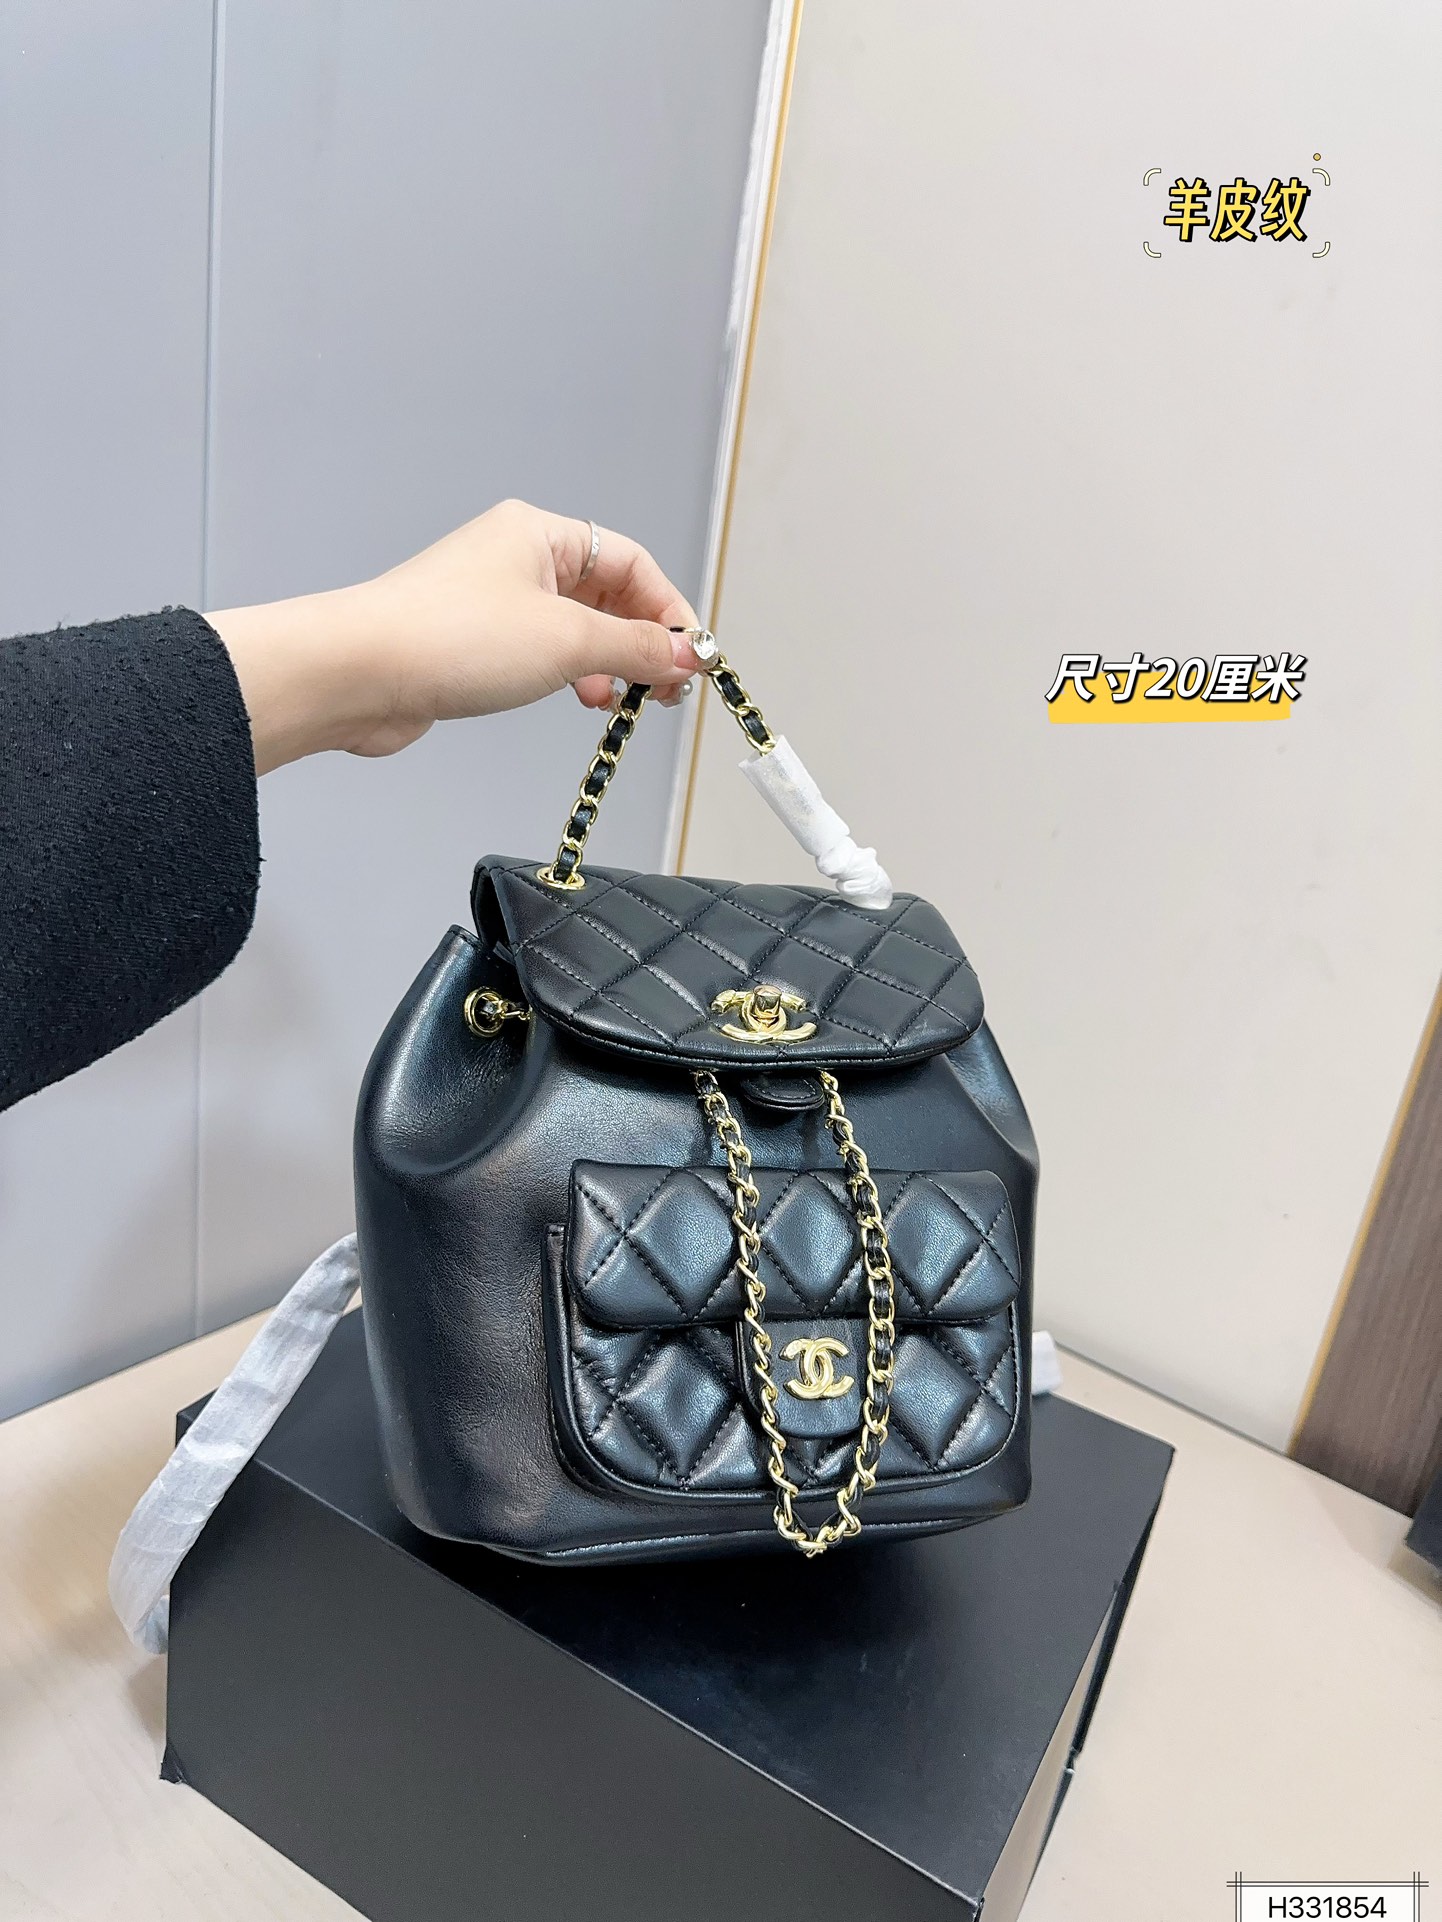 CC new arrival women backpack bag size ; 20 * 20 cm